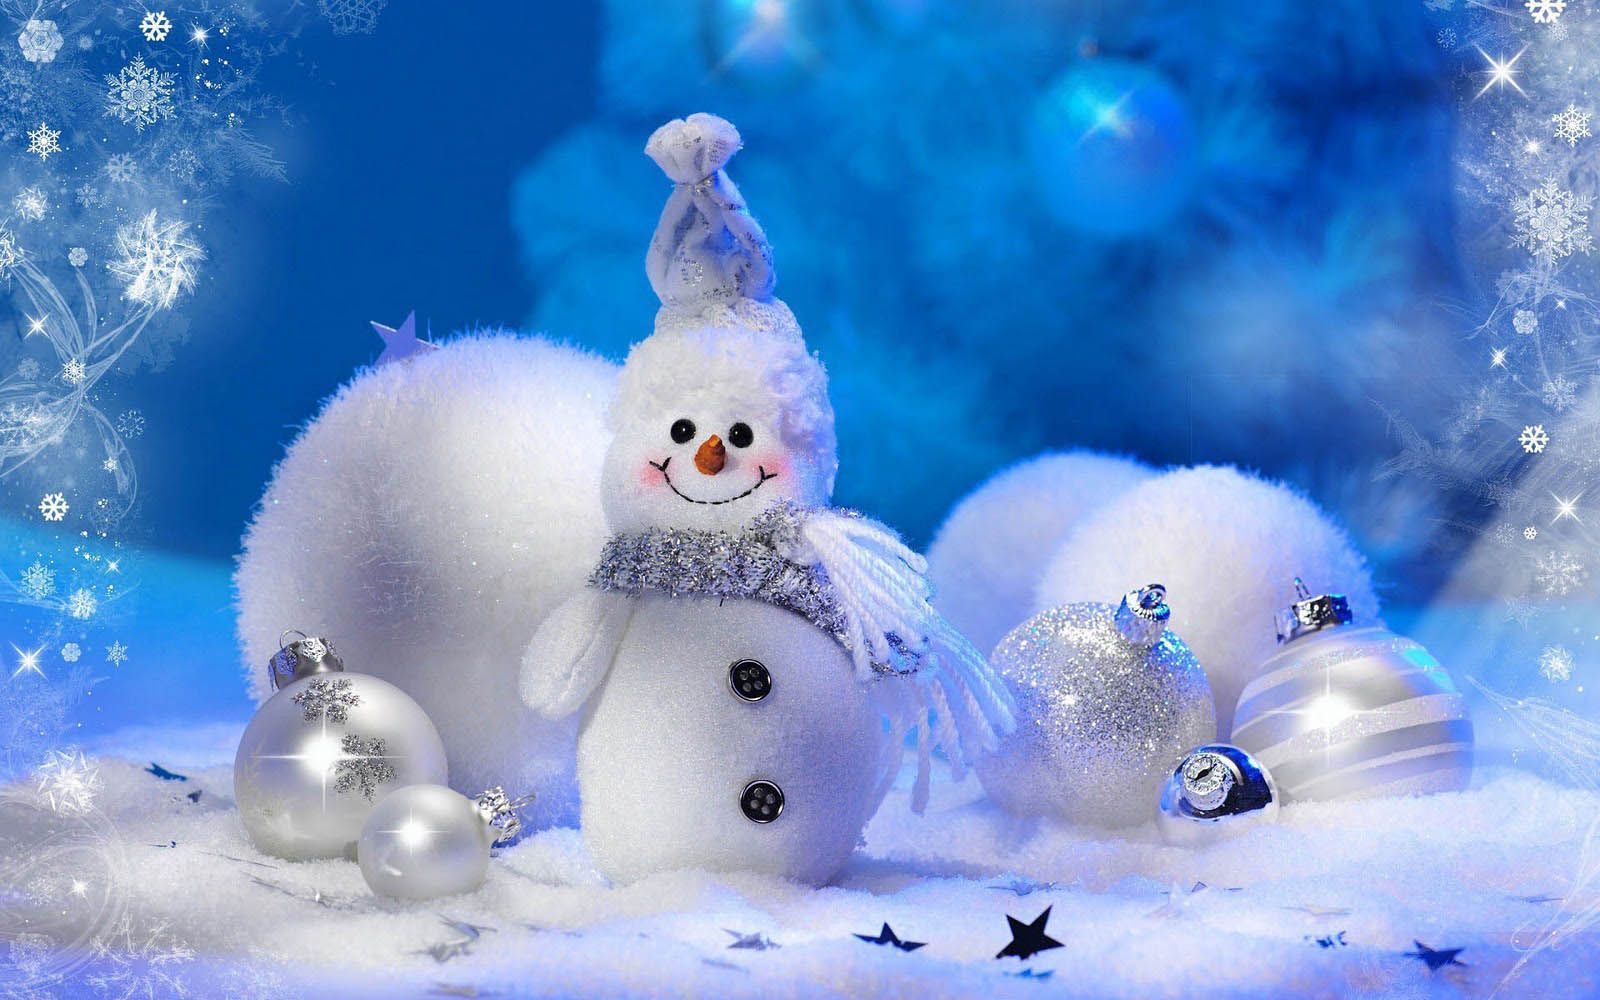 Snowman Christmas Decoration Wallpaper HD. Christmas desktop wallpaper, Christmas desktop, Christmas wallpaper hd